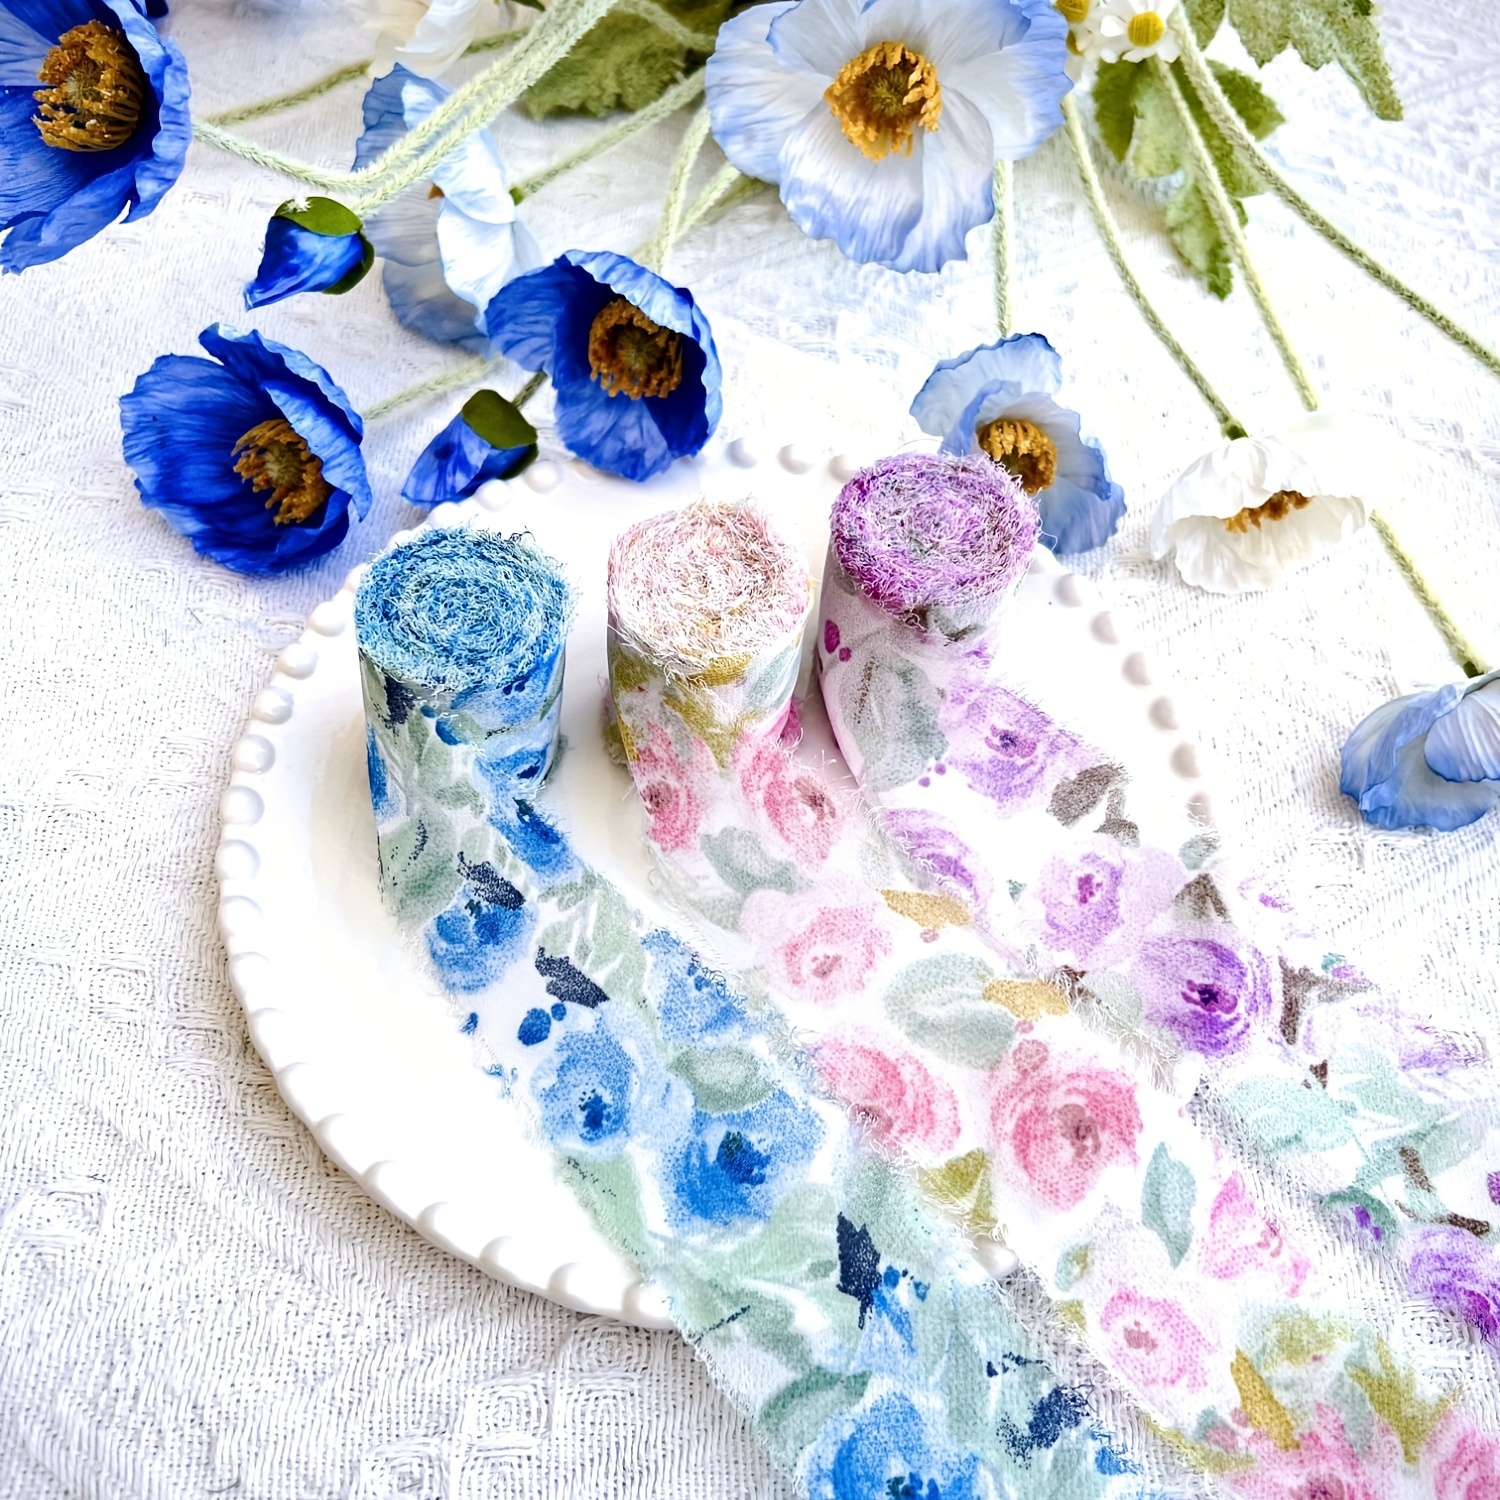 1 Roll Artistic Ribbon DIY Flower Packing Wedding Bouquet Decorative  Chiffon Lace Organza Ribbon BEIGE BEST WISHES 